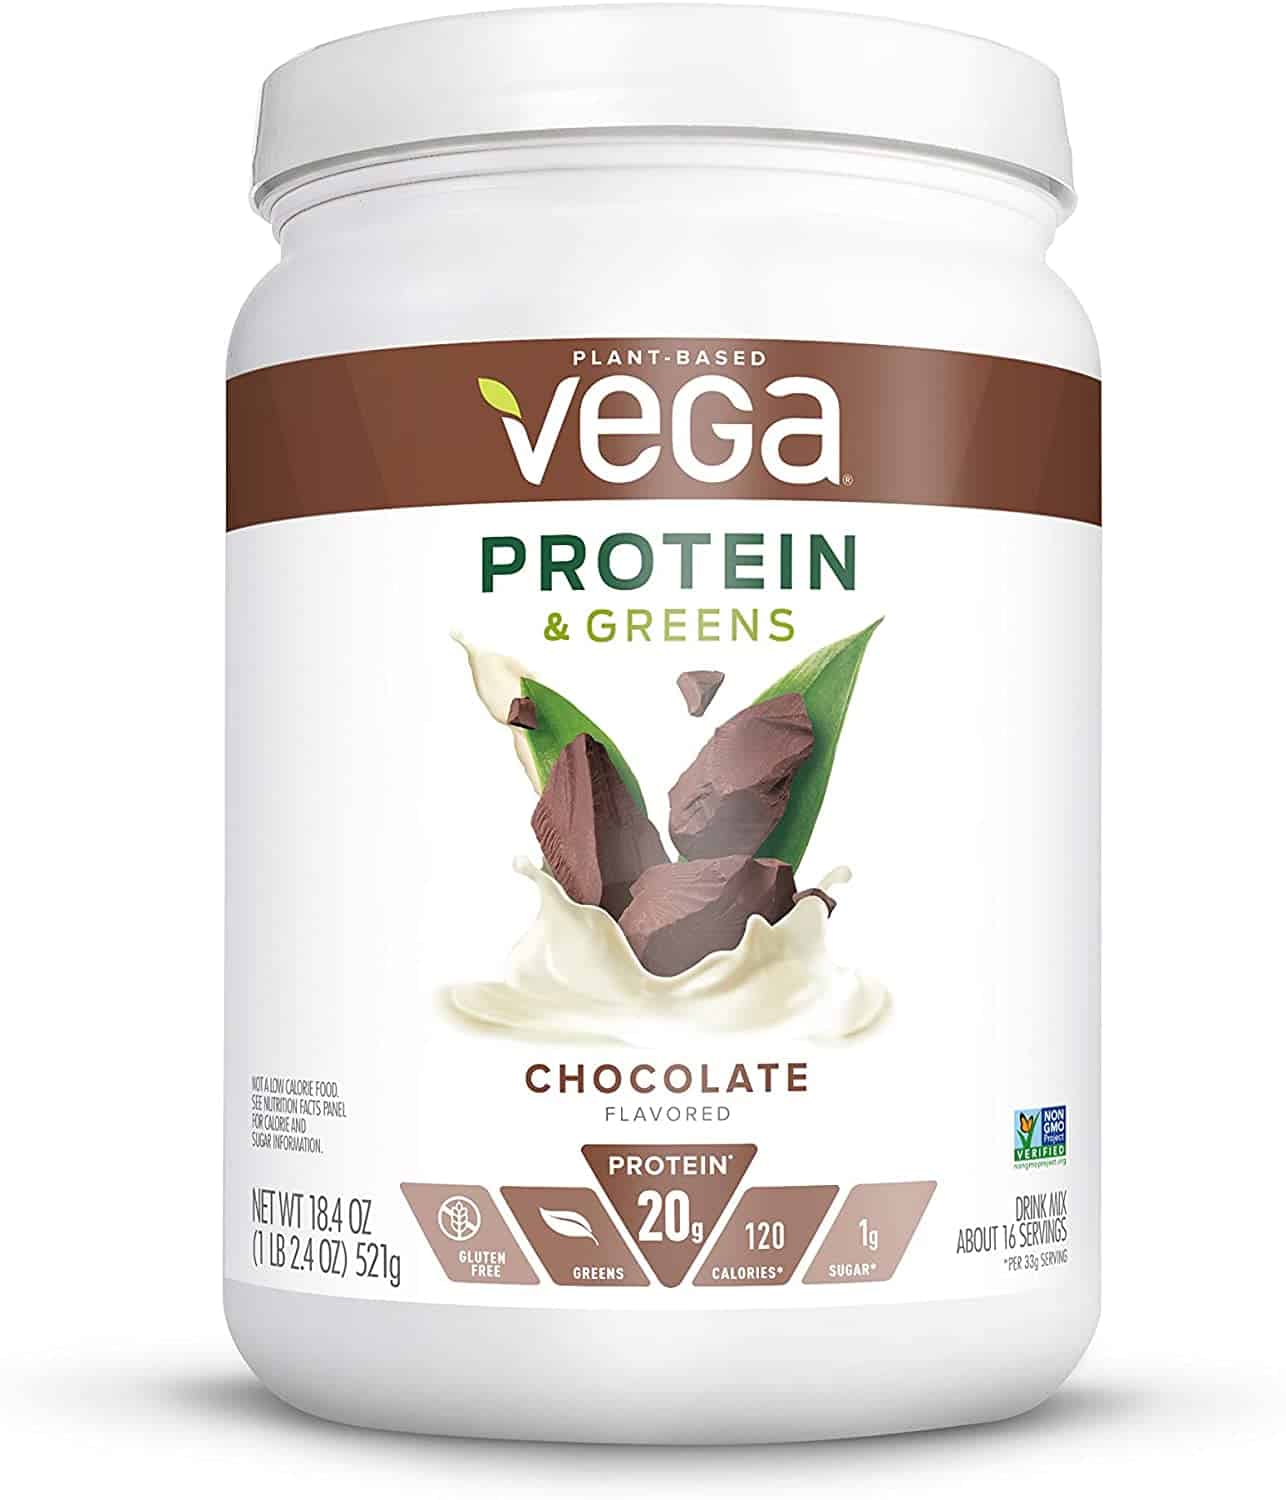 Container of Vega Protein & Greens vegan chocolate protein powder